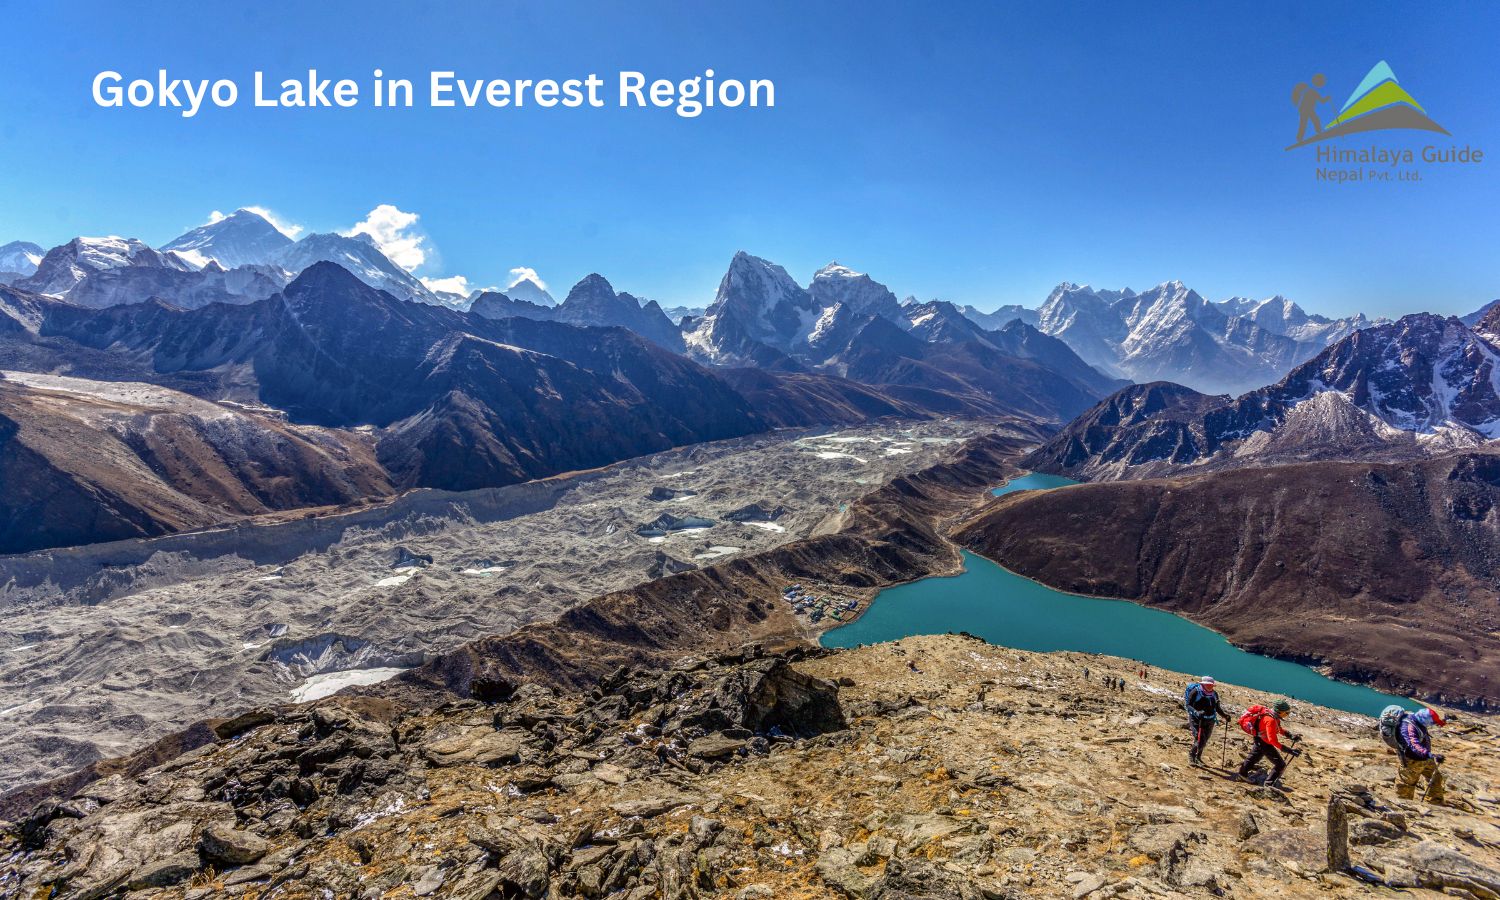 Gokyo Lake in Everest Region - Everest Photo Tour